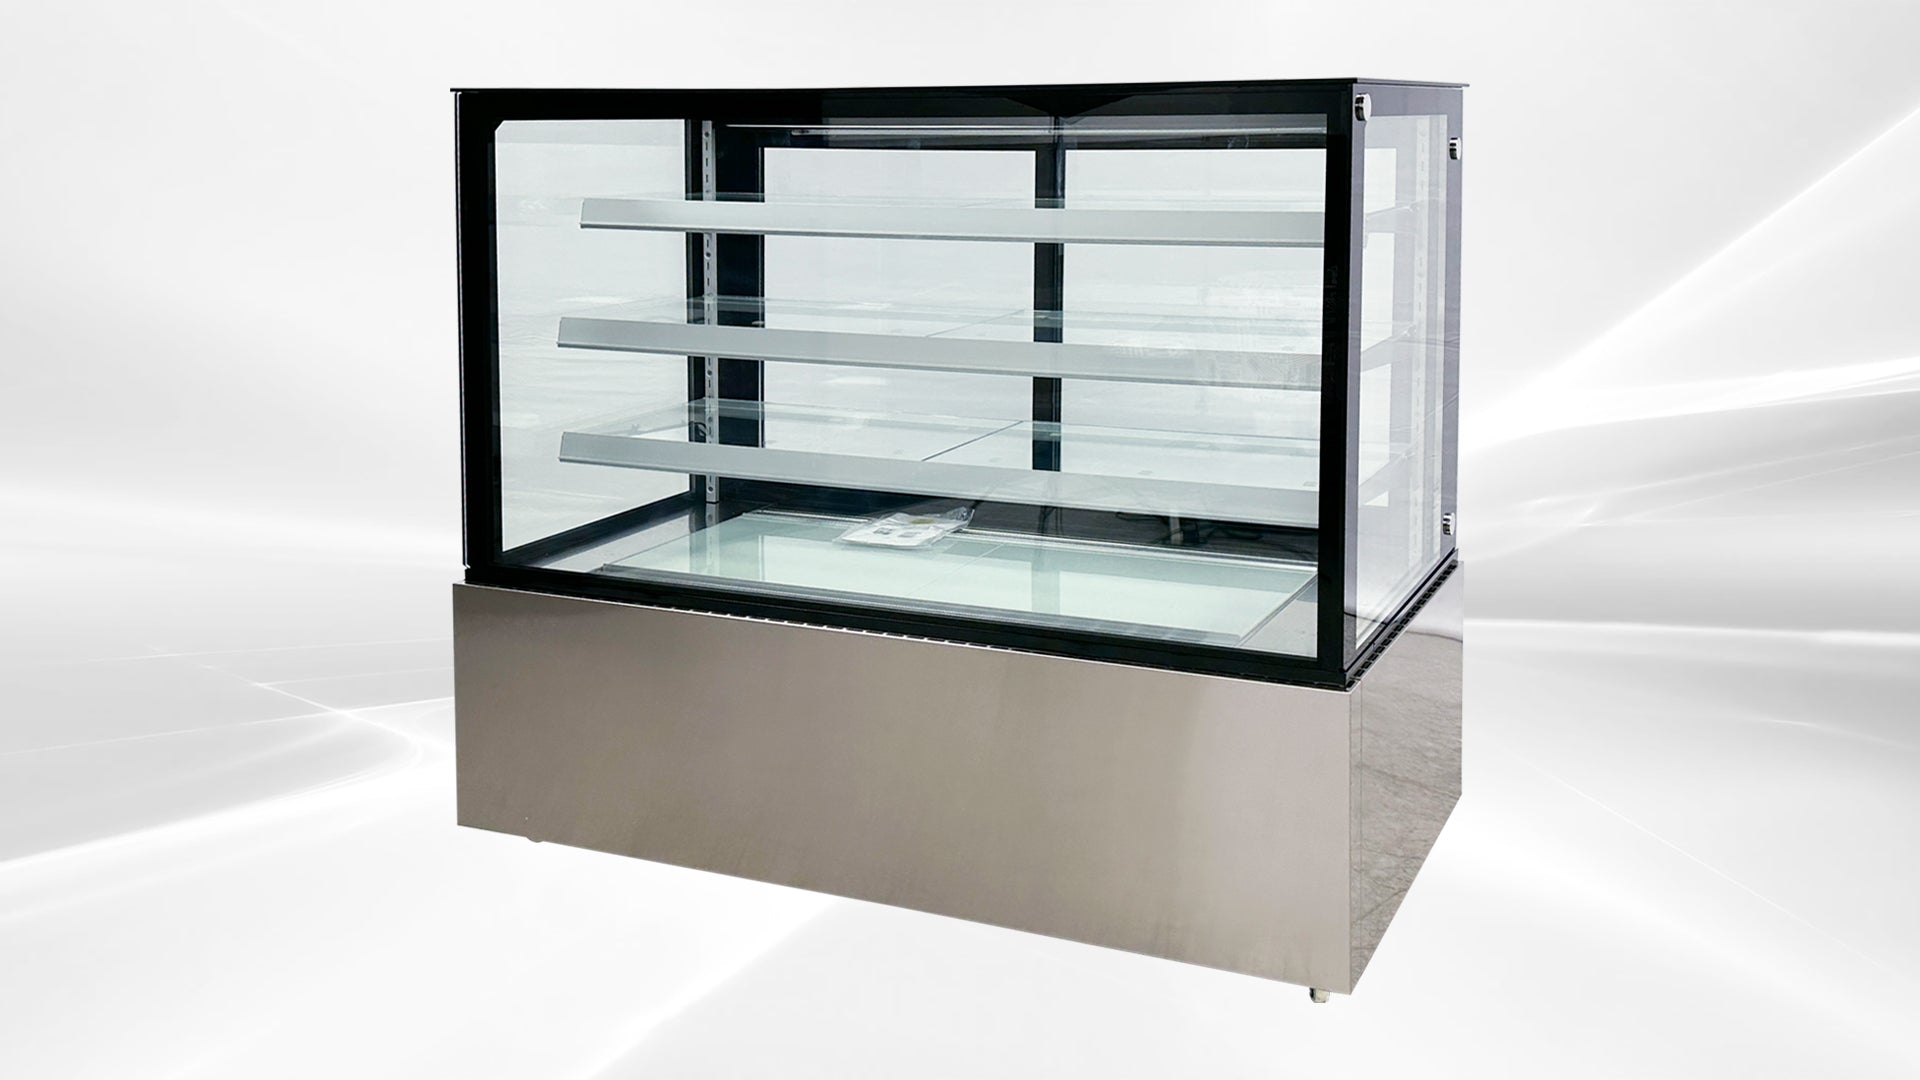 CW-471 Refrigerated bakery refrigerator case 3 shelf NSF 60 in